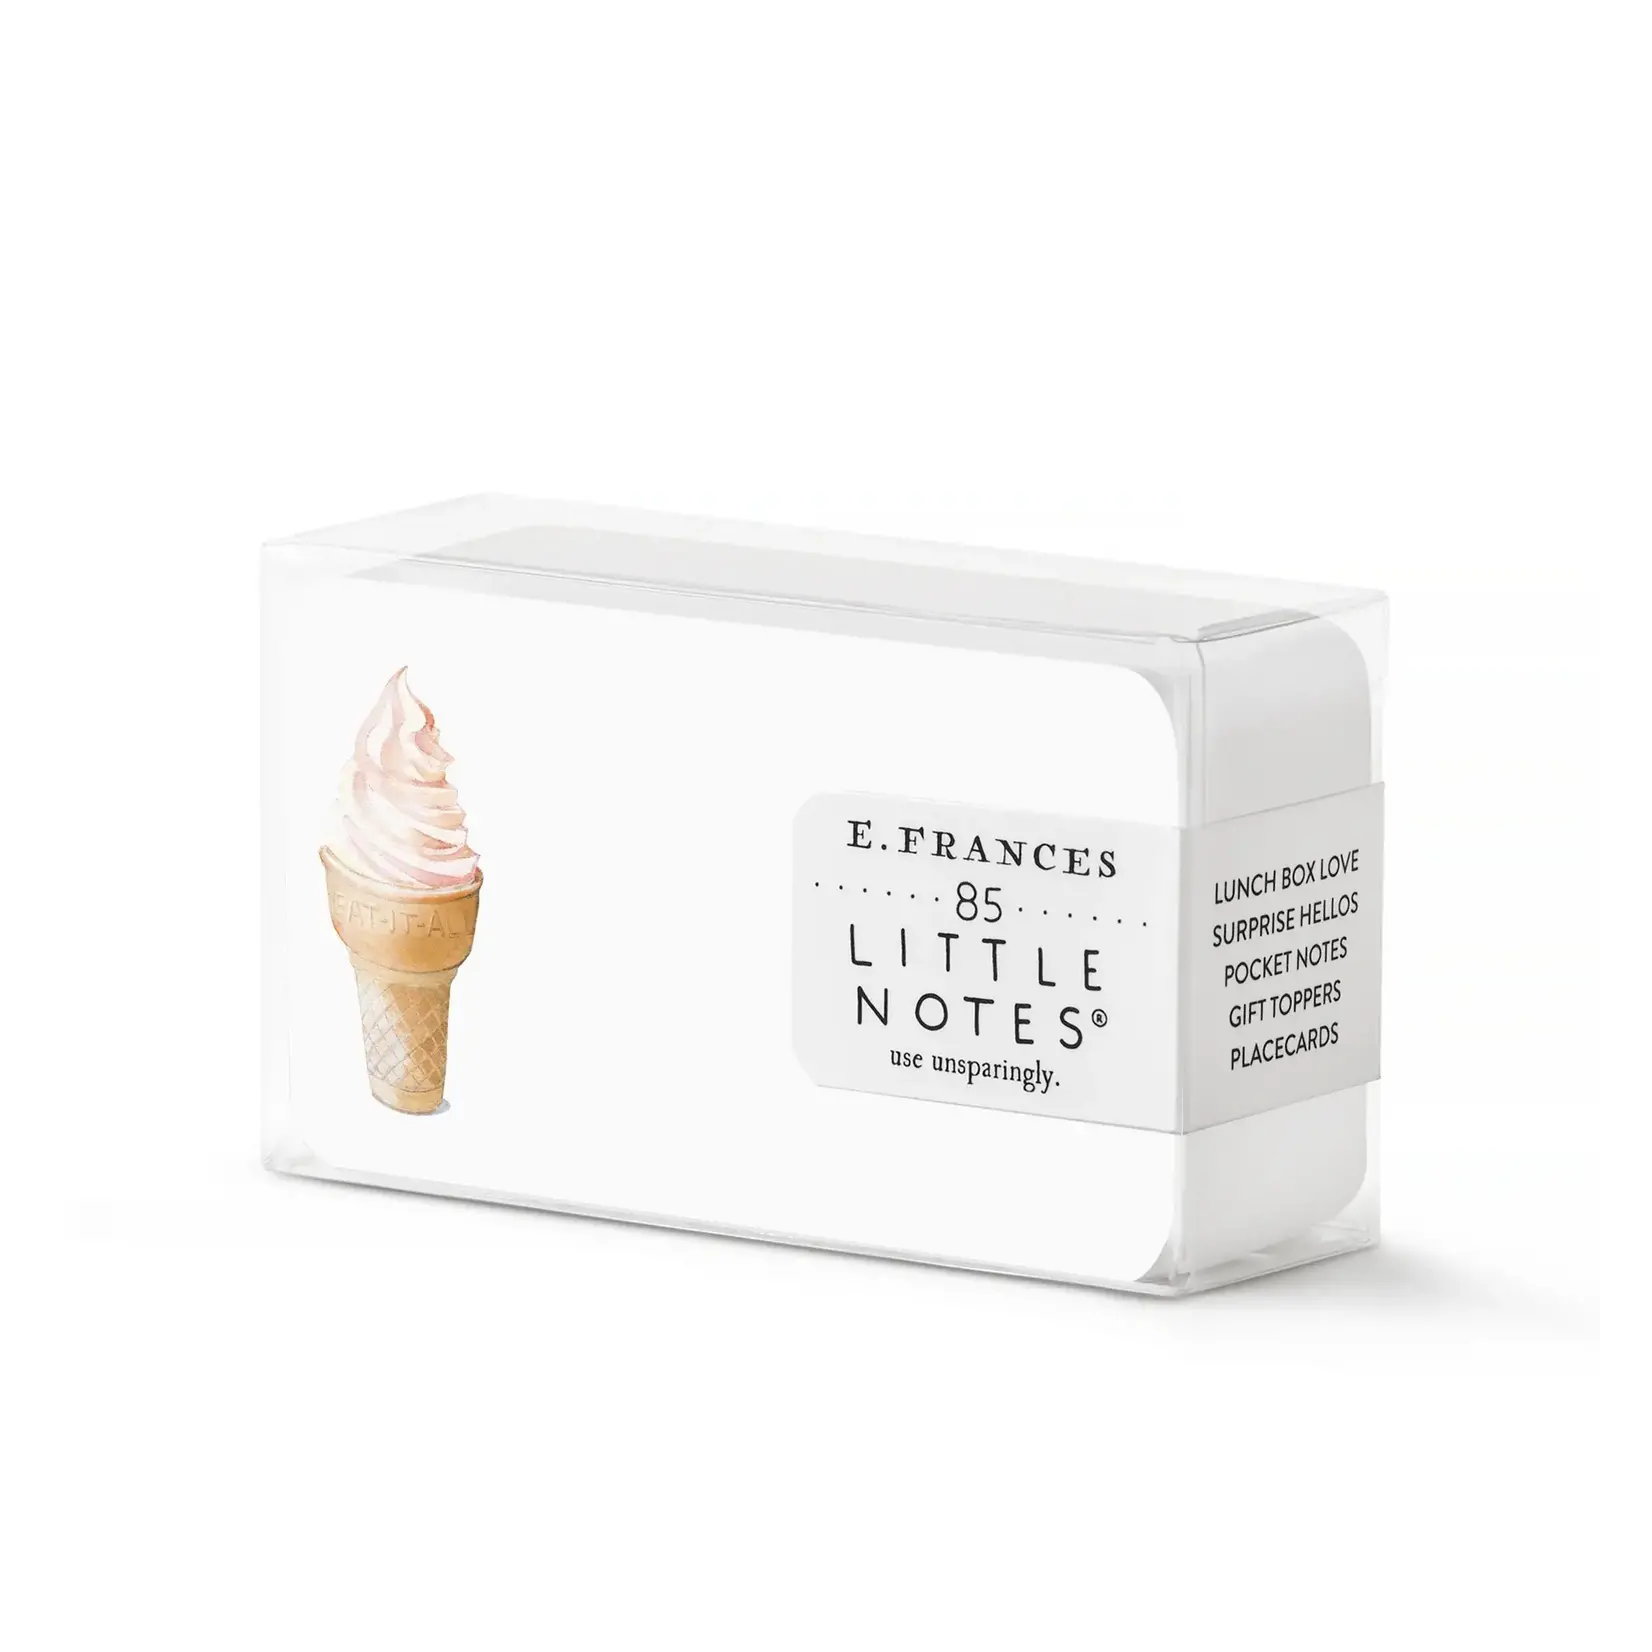 E. Frances Ice Cream Little Notes